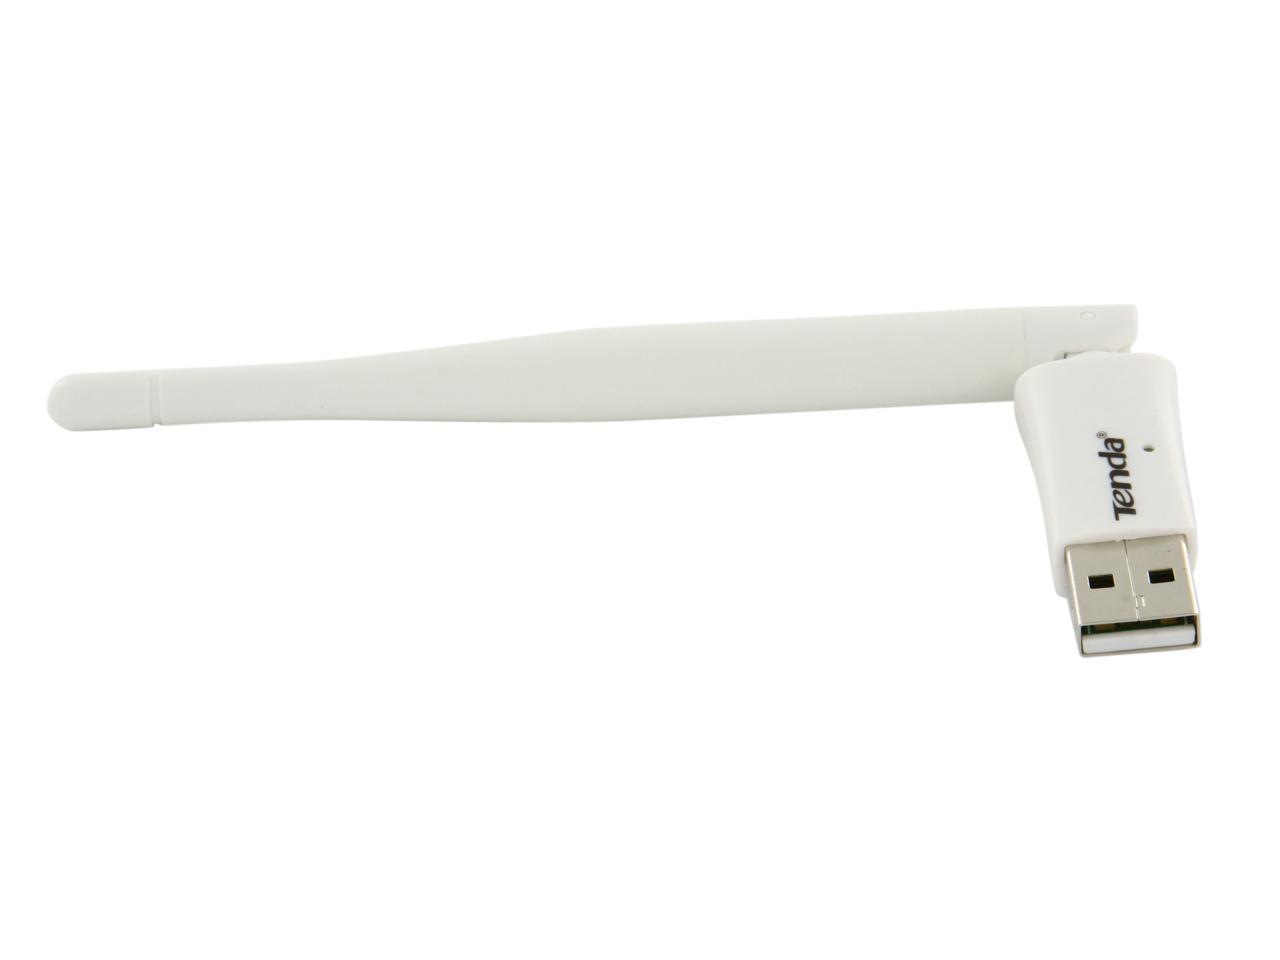 Драйвера 802.11 n usb wireless lan card. 802.11N USB Wireless lan Card. Driver Tenda WIFI адаптер. Tenda w522u. Tenda w322ua.